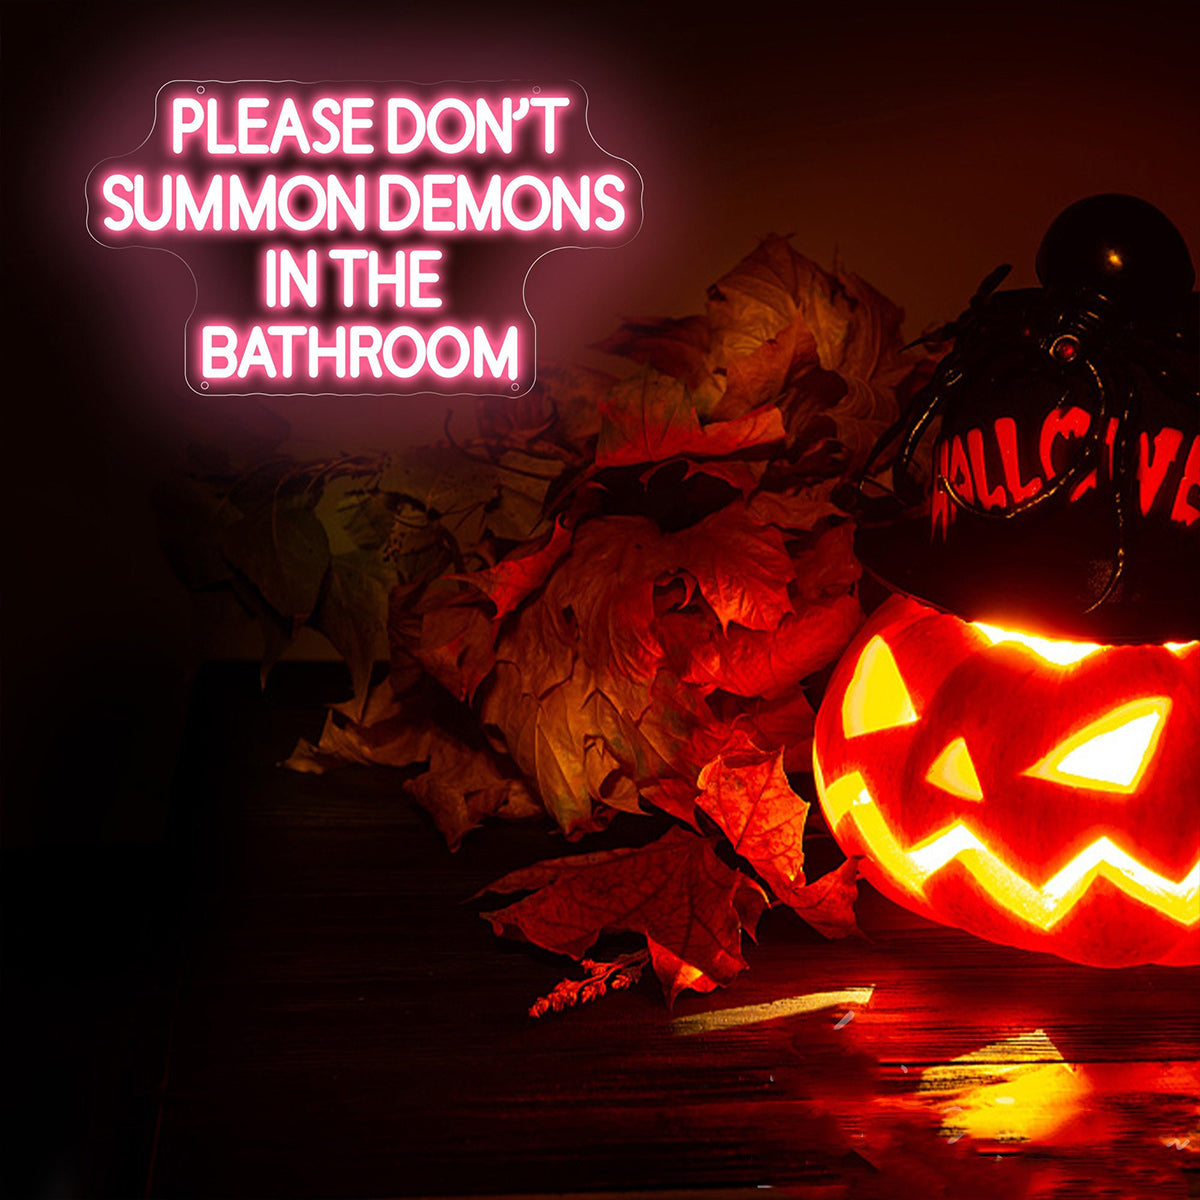 NEONIP-100% Handmade Halloween Custom Please Don't Summon Demons In The Bathroom Neon Sign